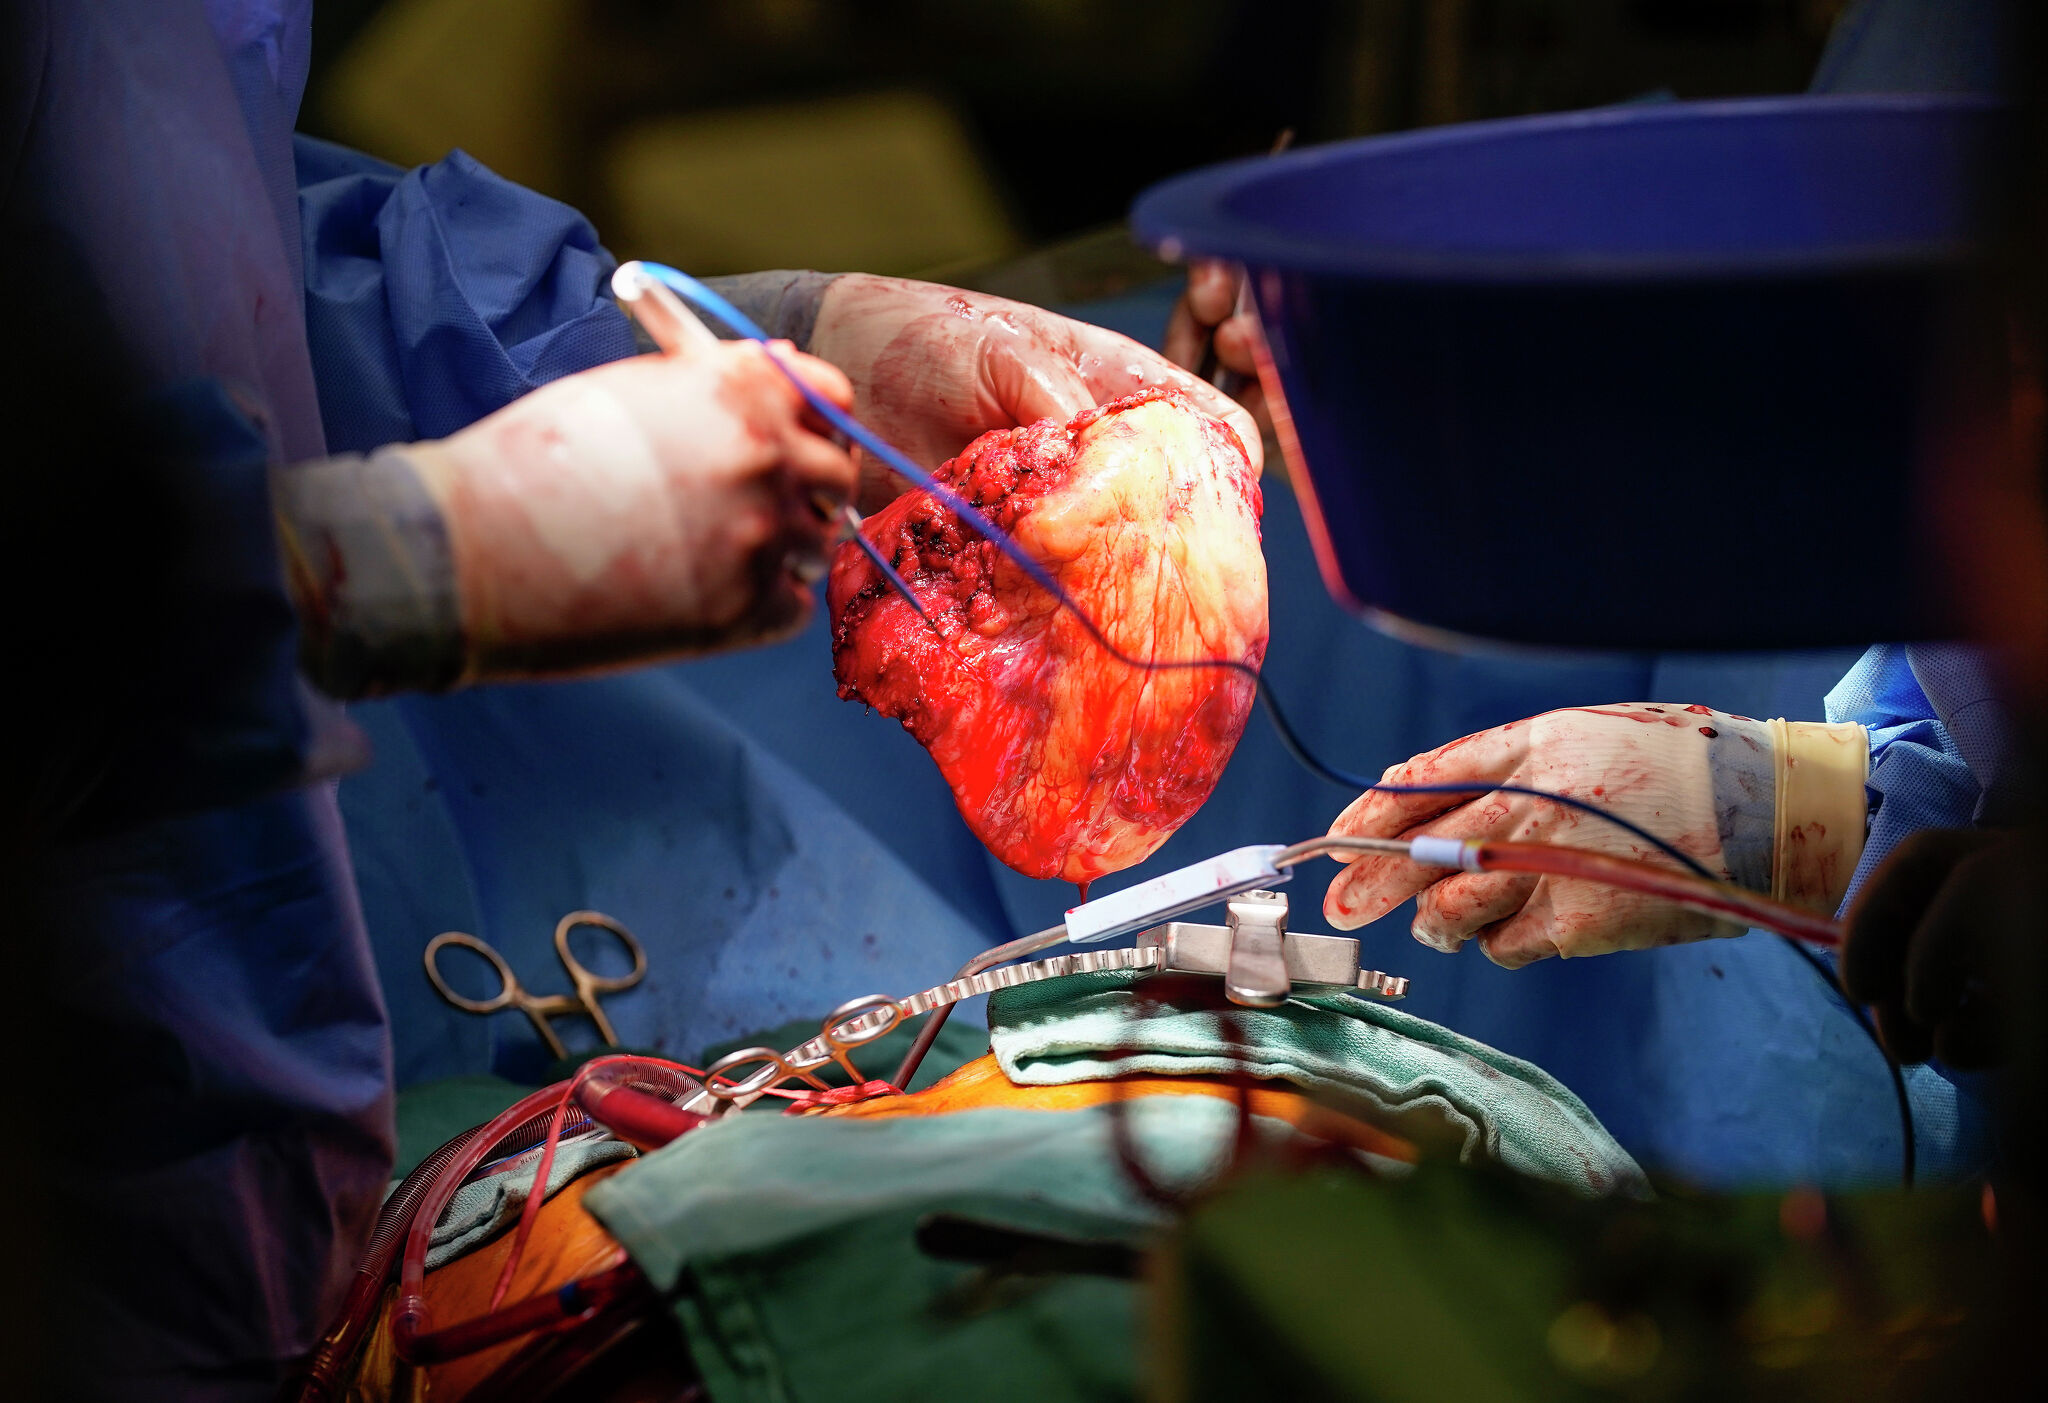 How groundbreaking tech could revolutionize heart transplants in Houston